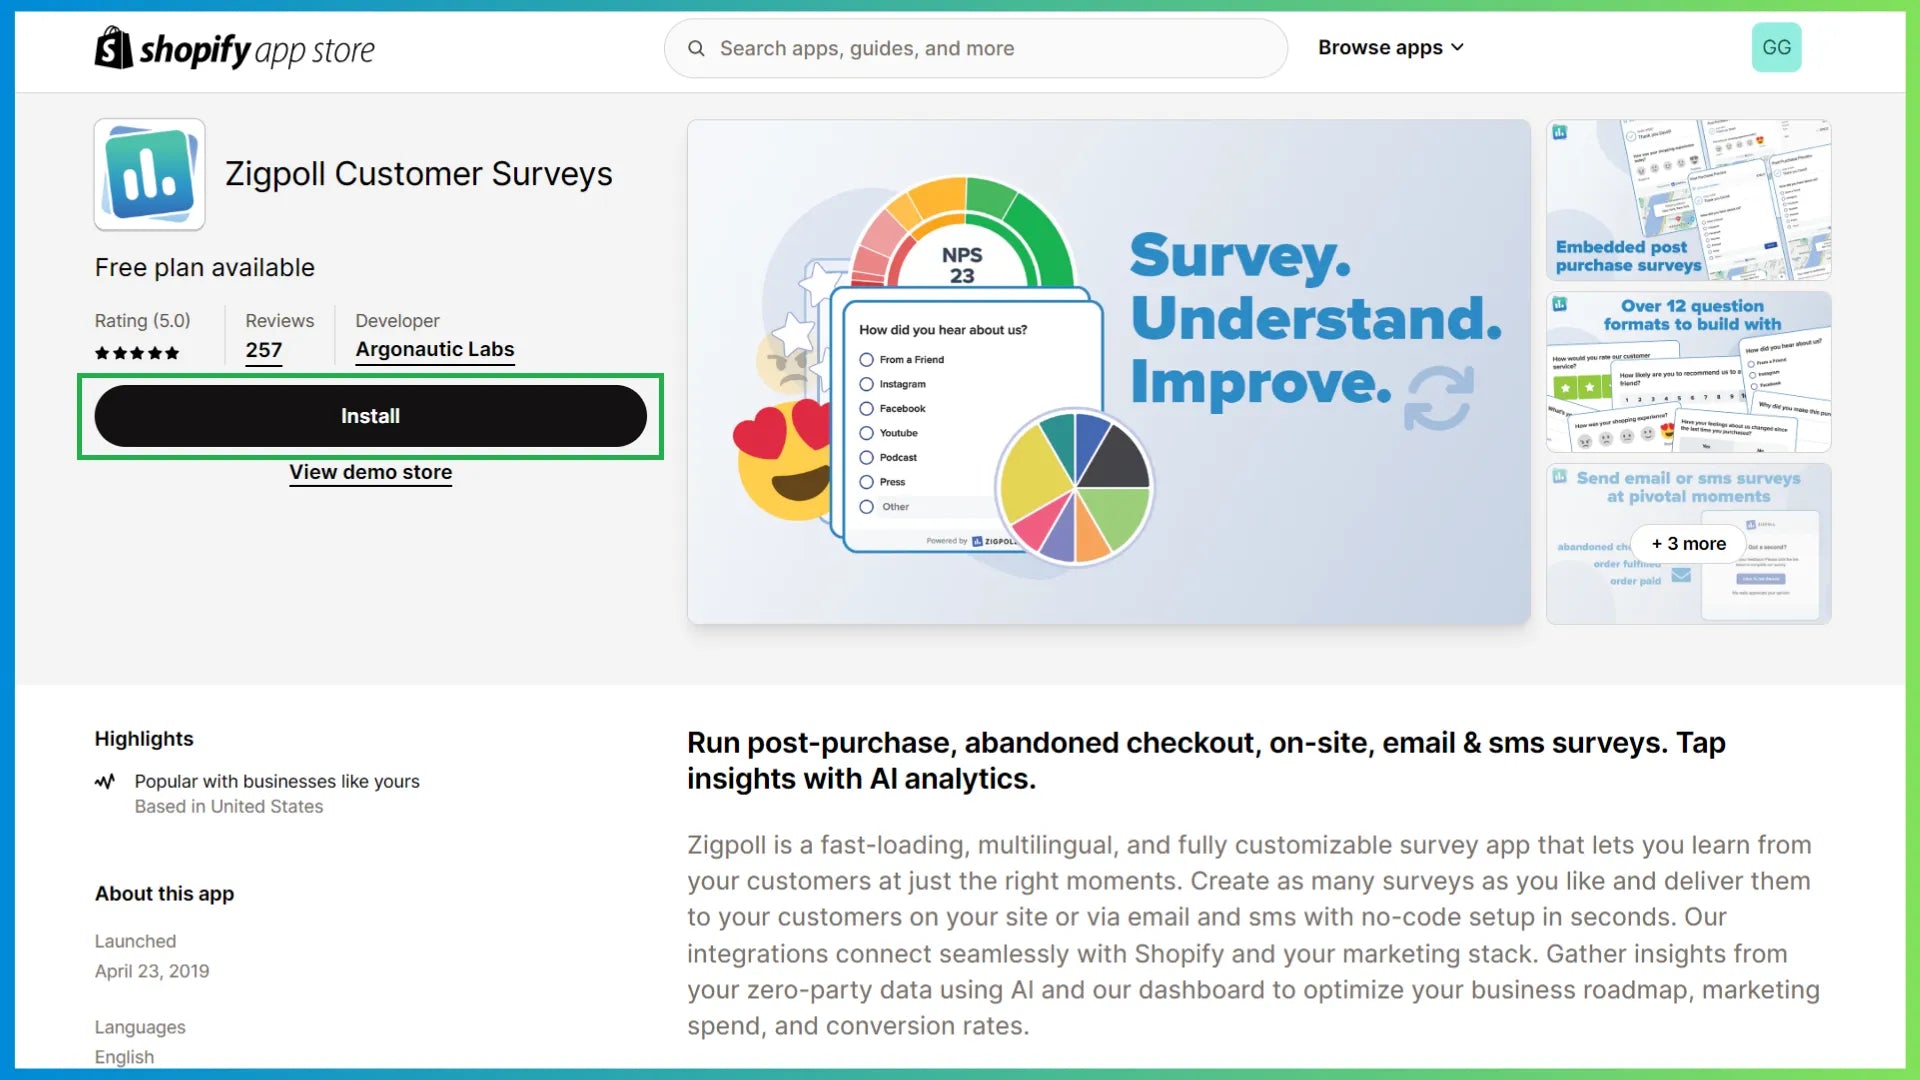 Post-purchase survey app - Zigpoll Customer Surveys